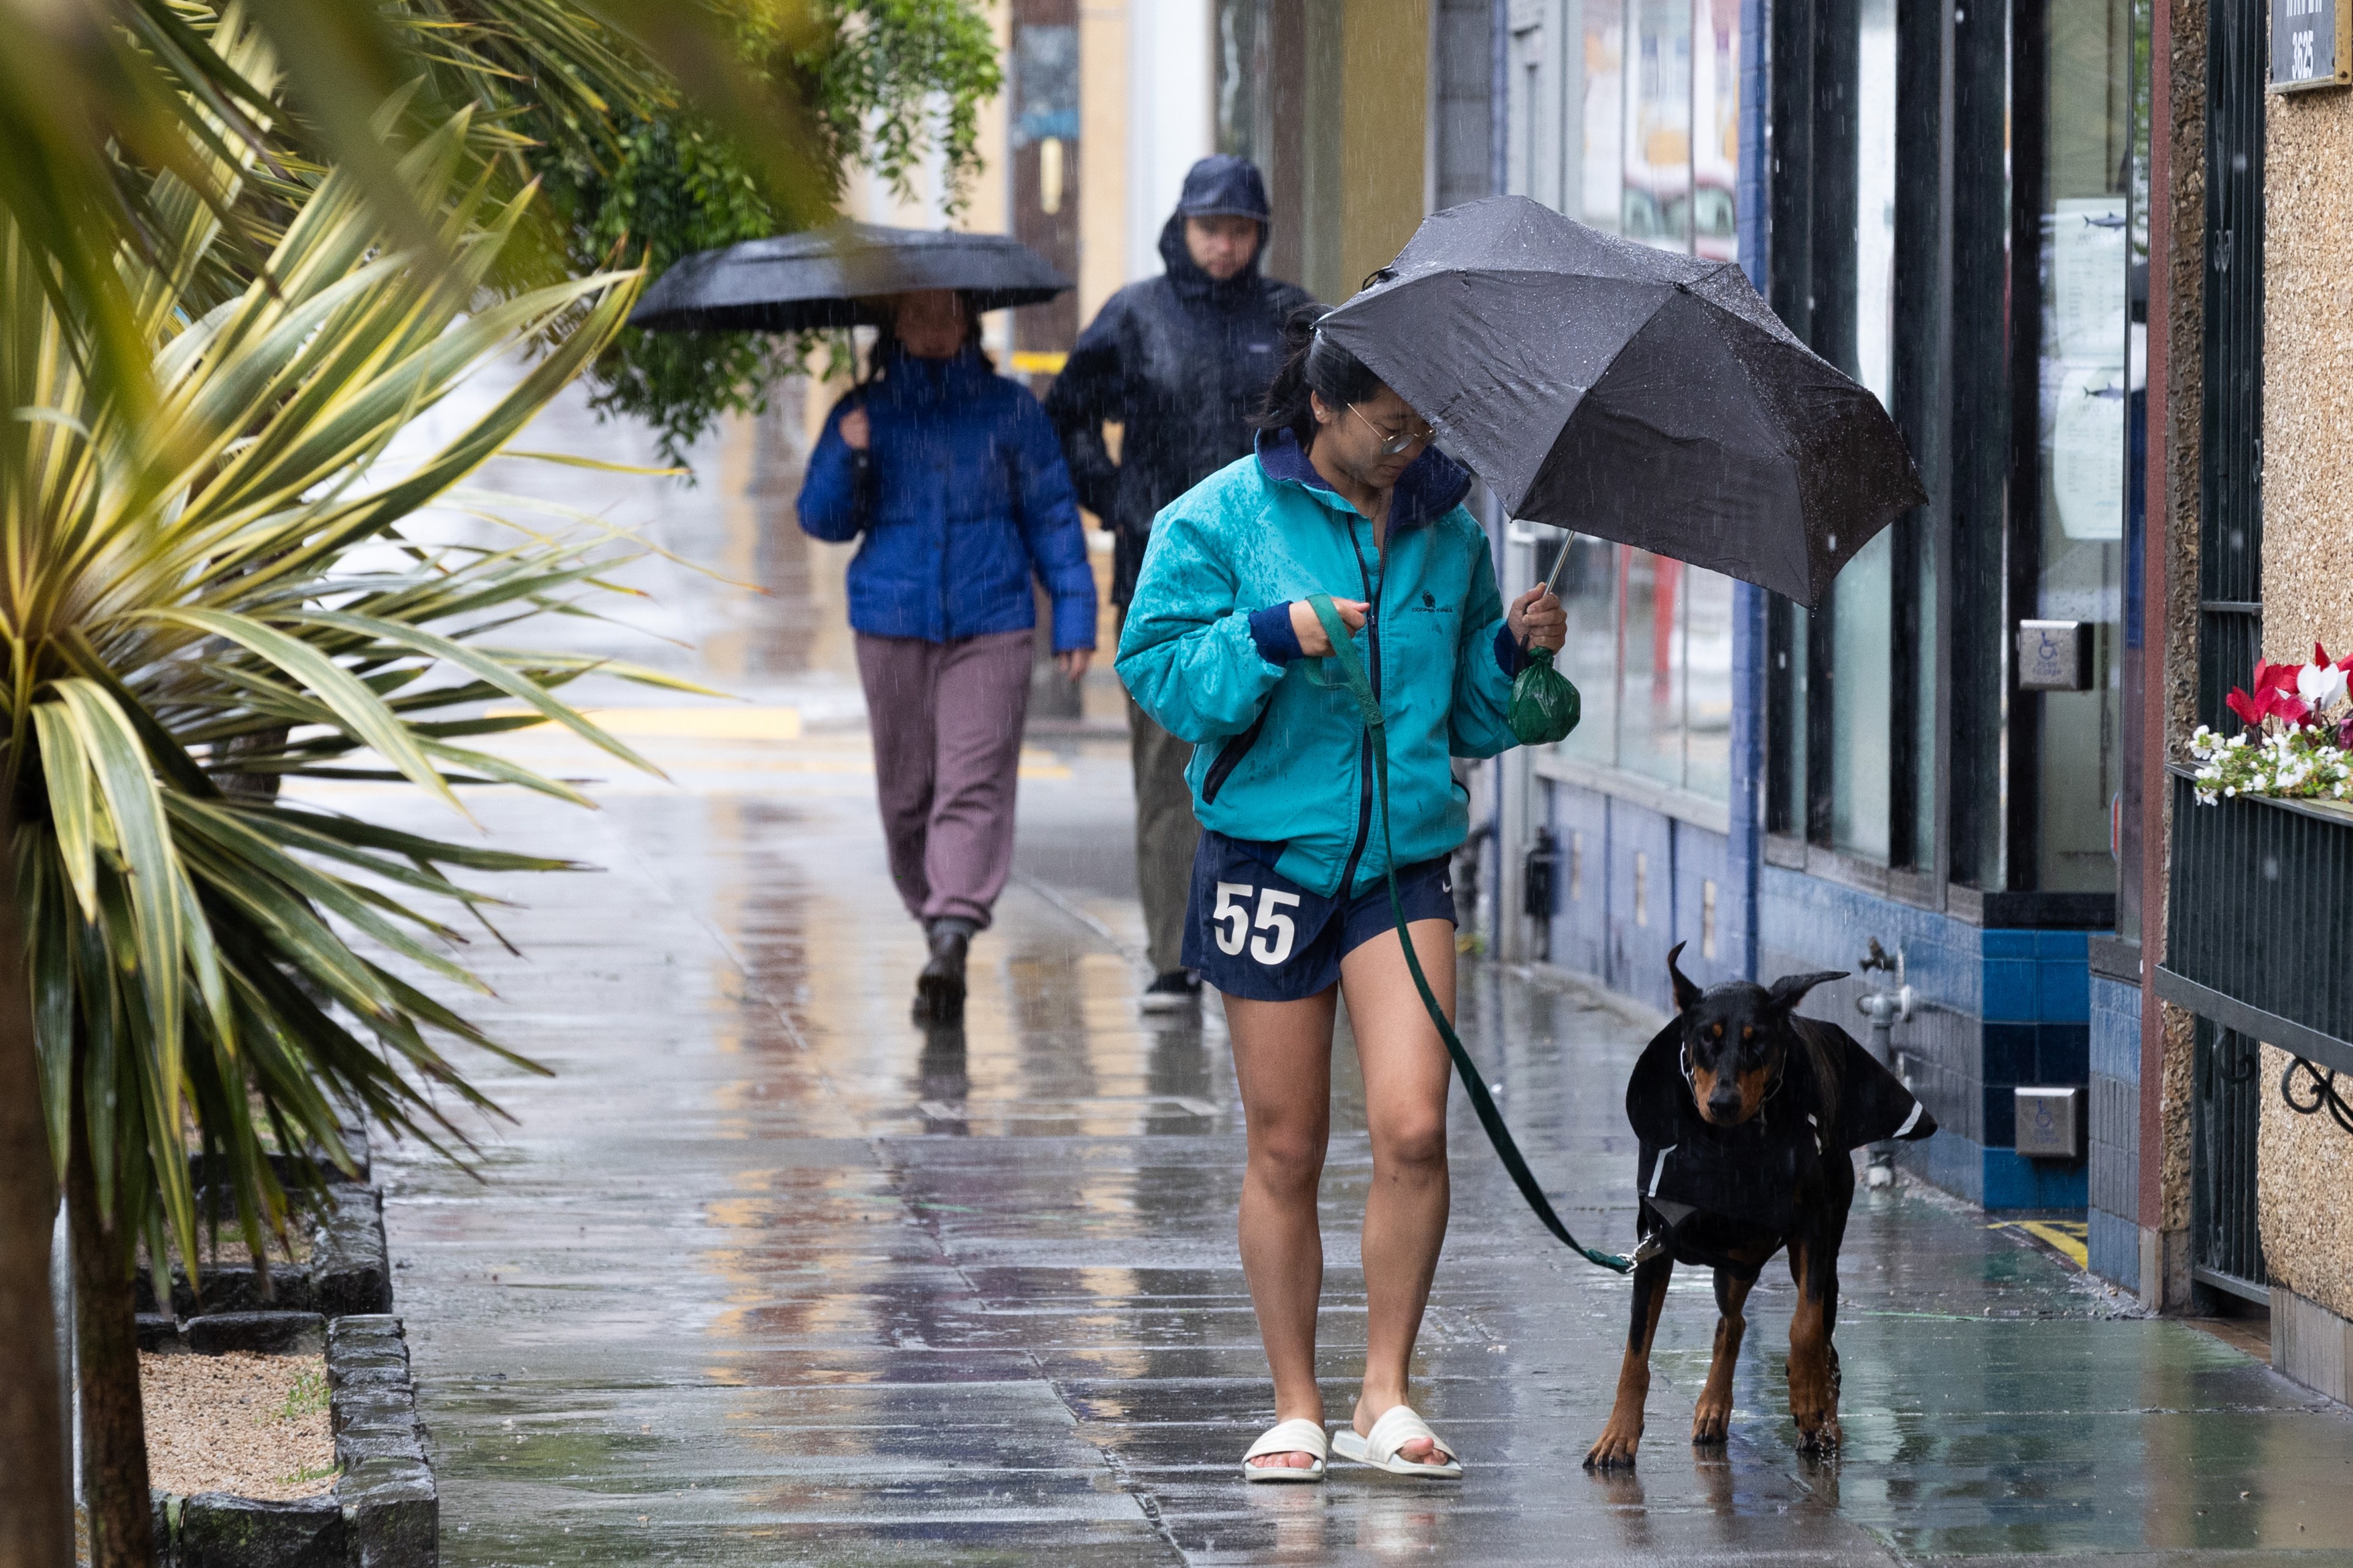 A woman holding an umbrella walks her dog in the rain.